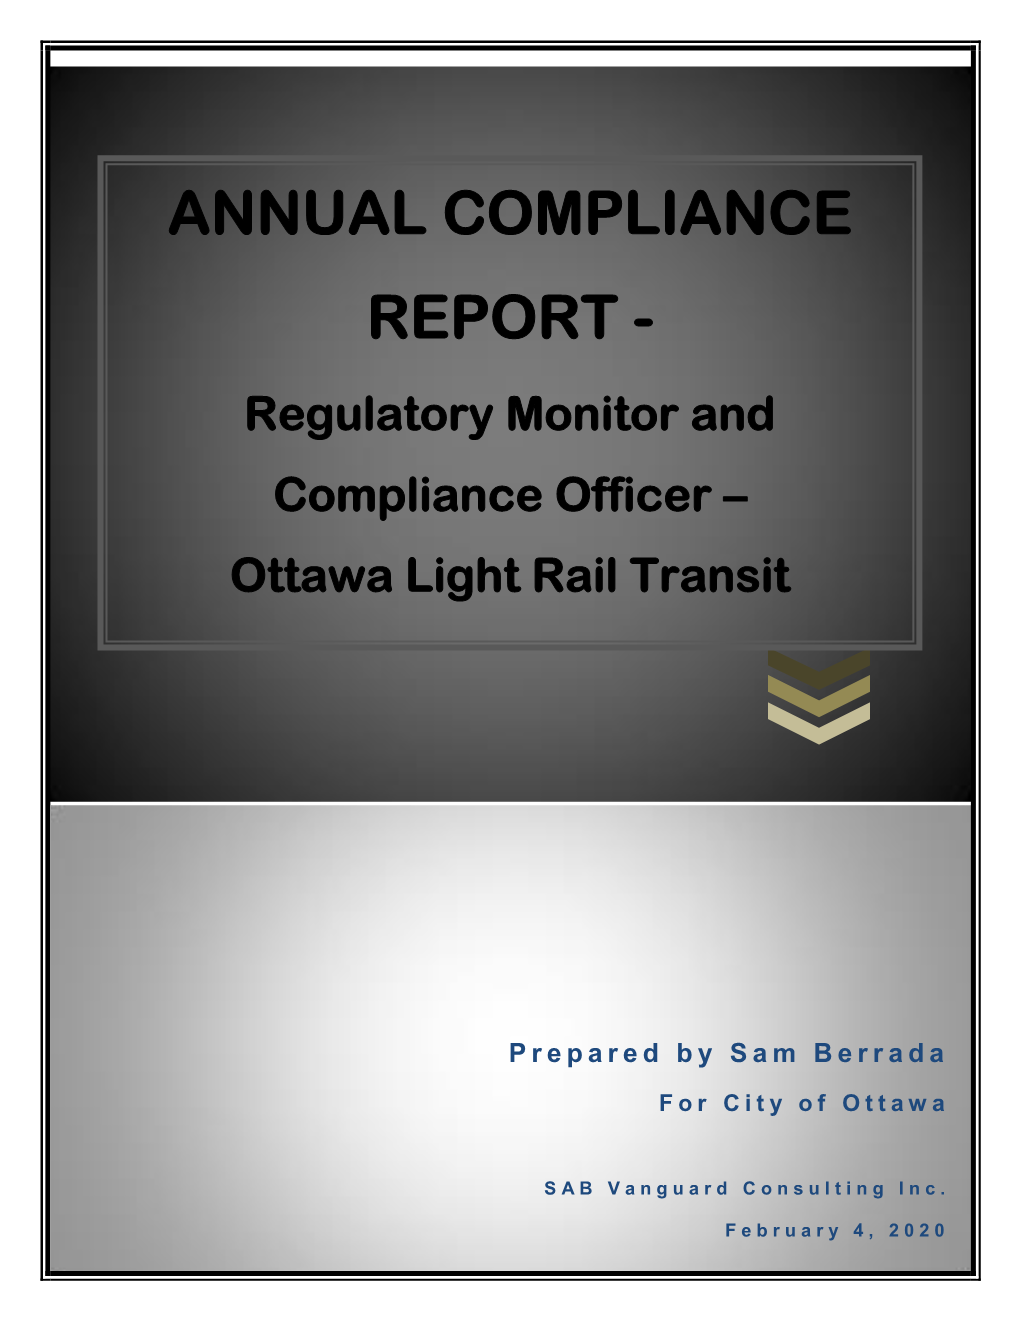 Draft Annual Report